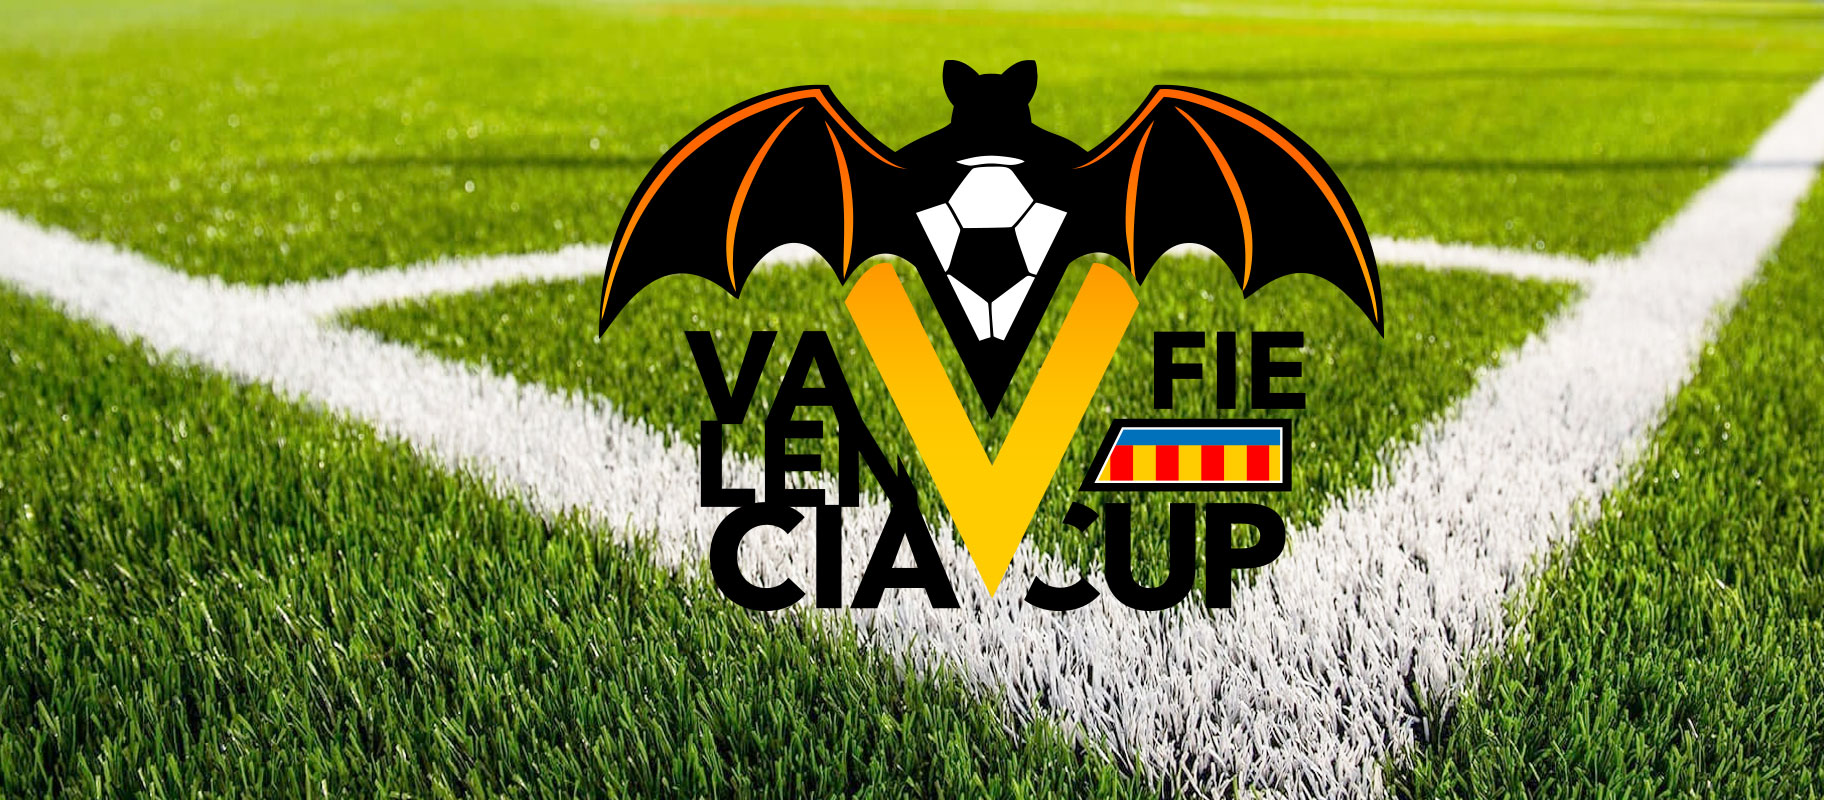 Valencia FIE Cup